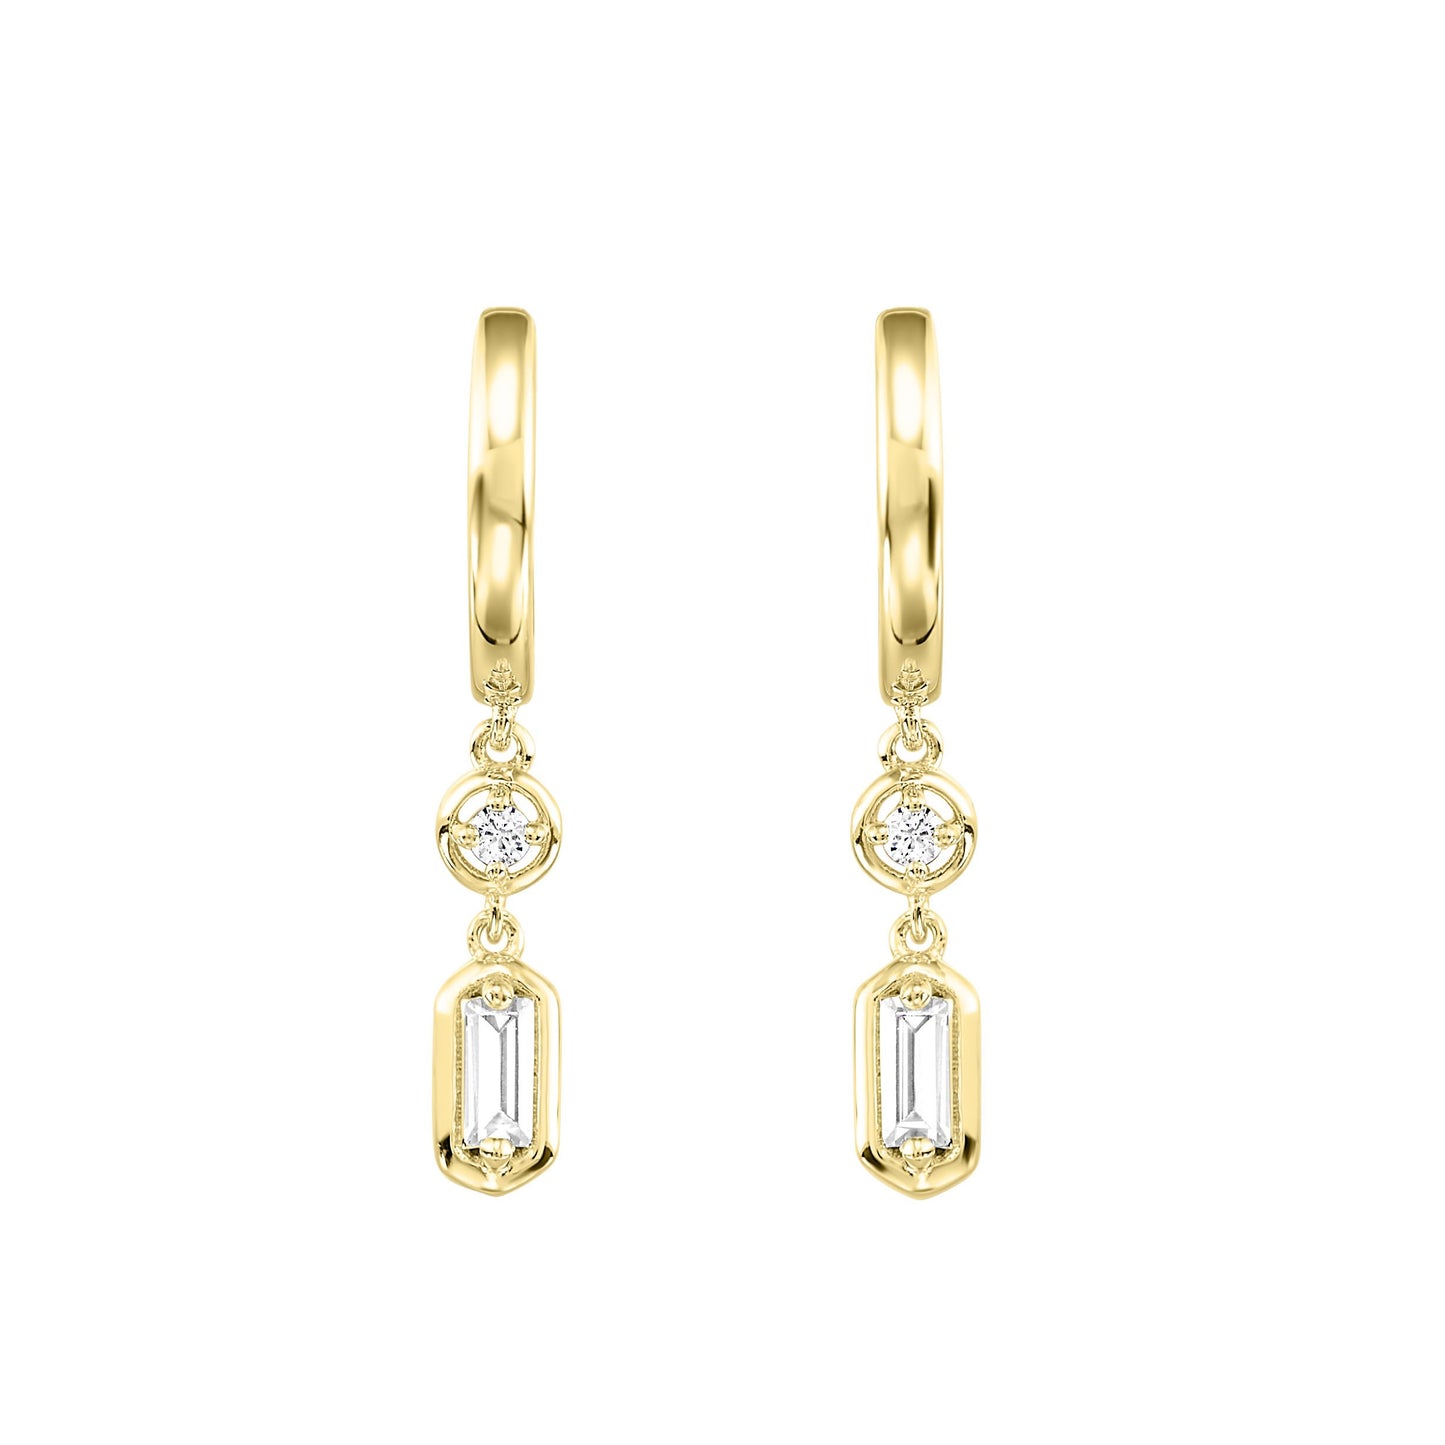 14k Gold and Diamond Earrings